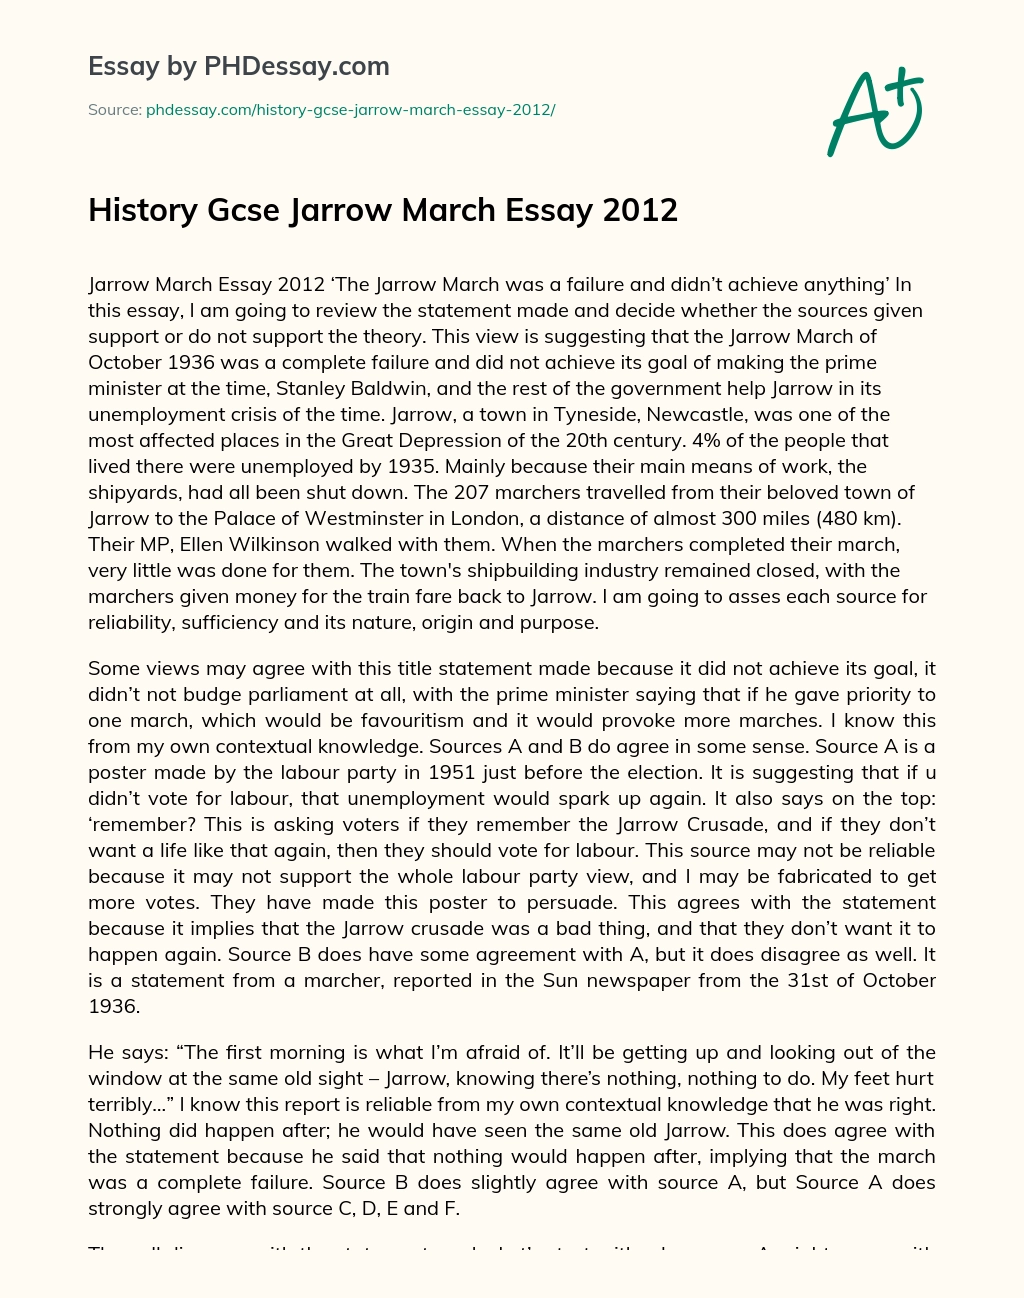 History Gcse Jarrow March Essay 2012 essay